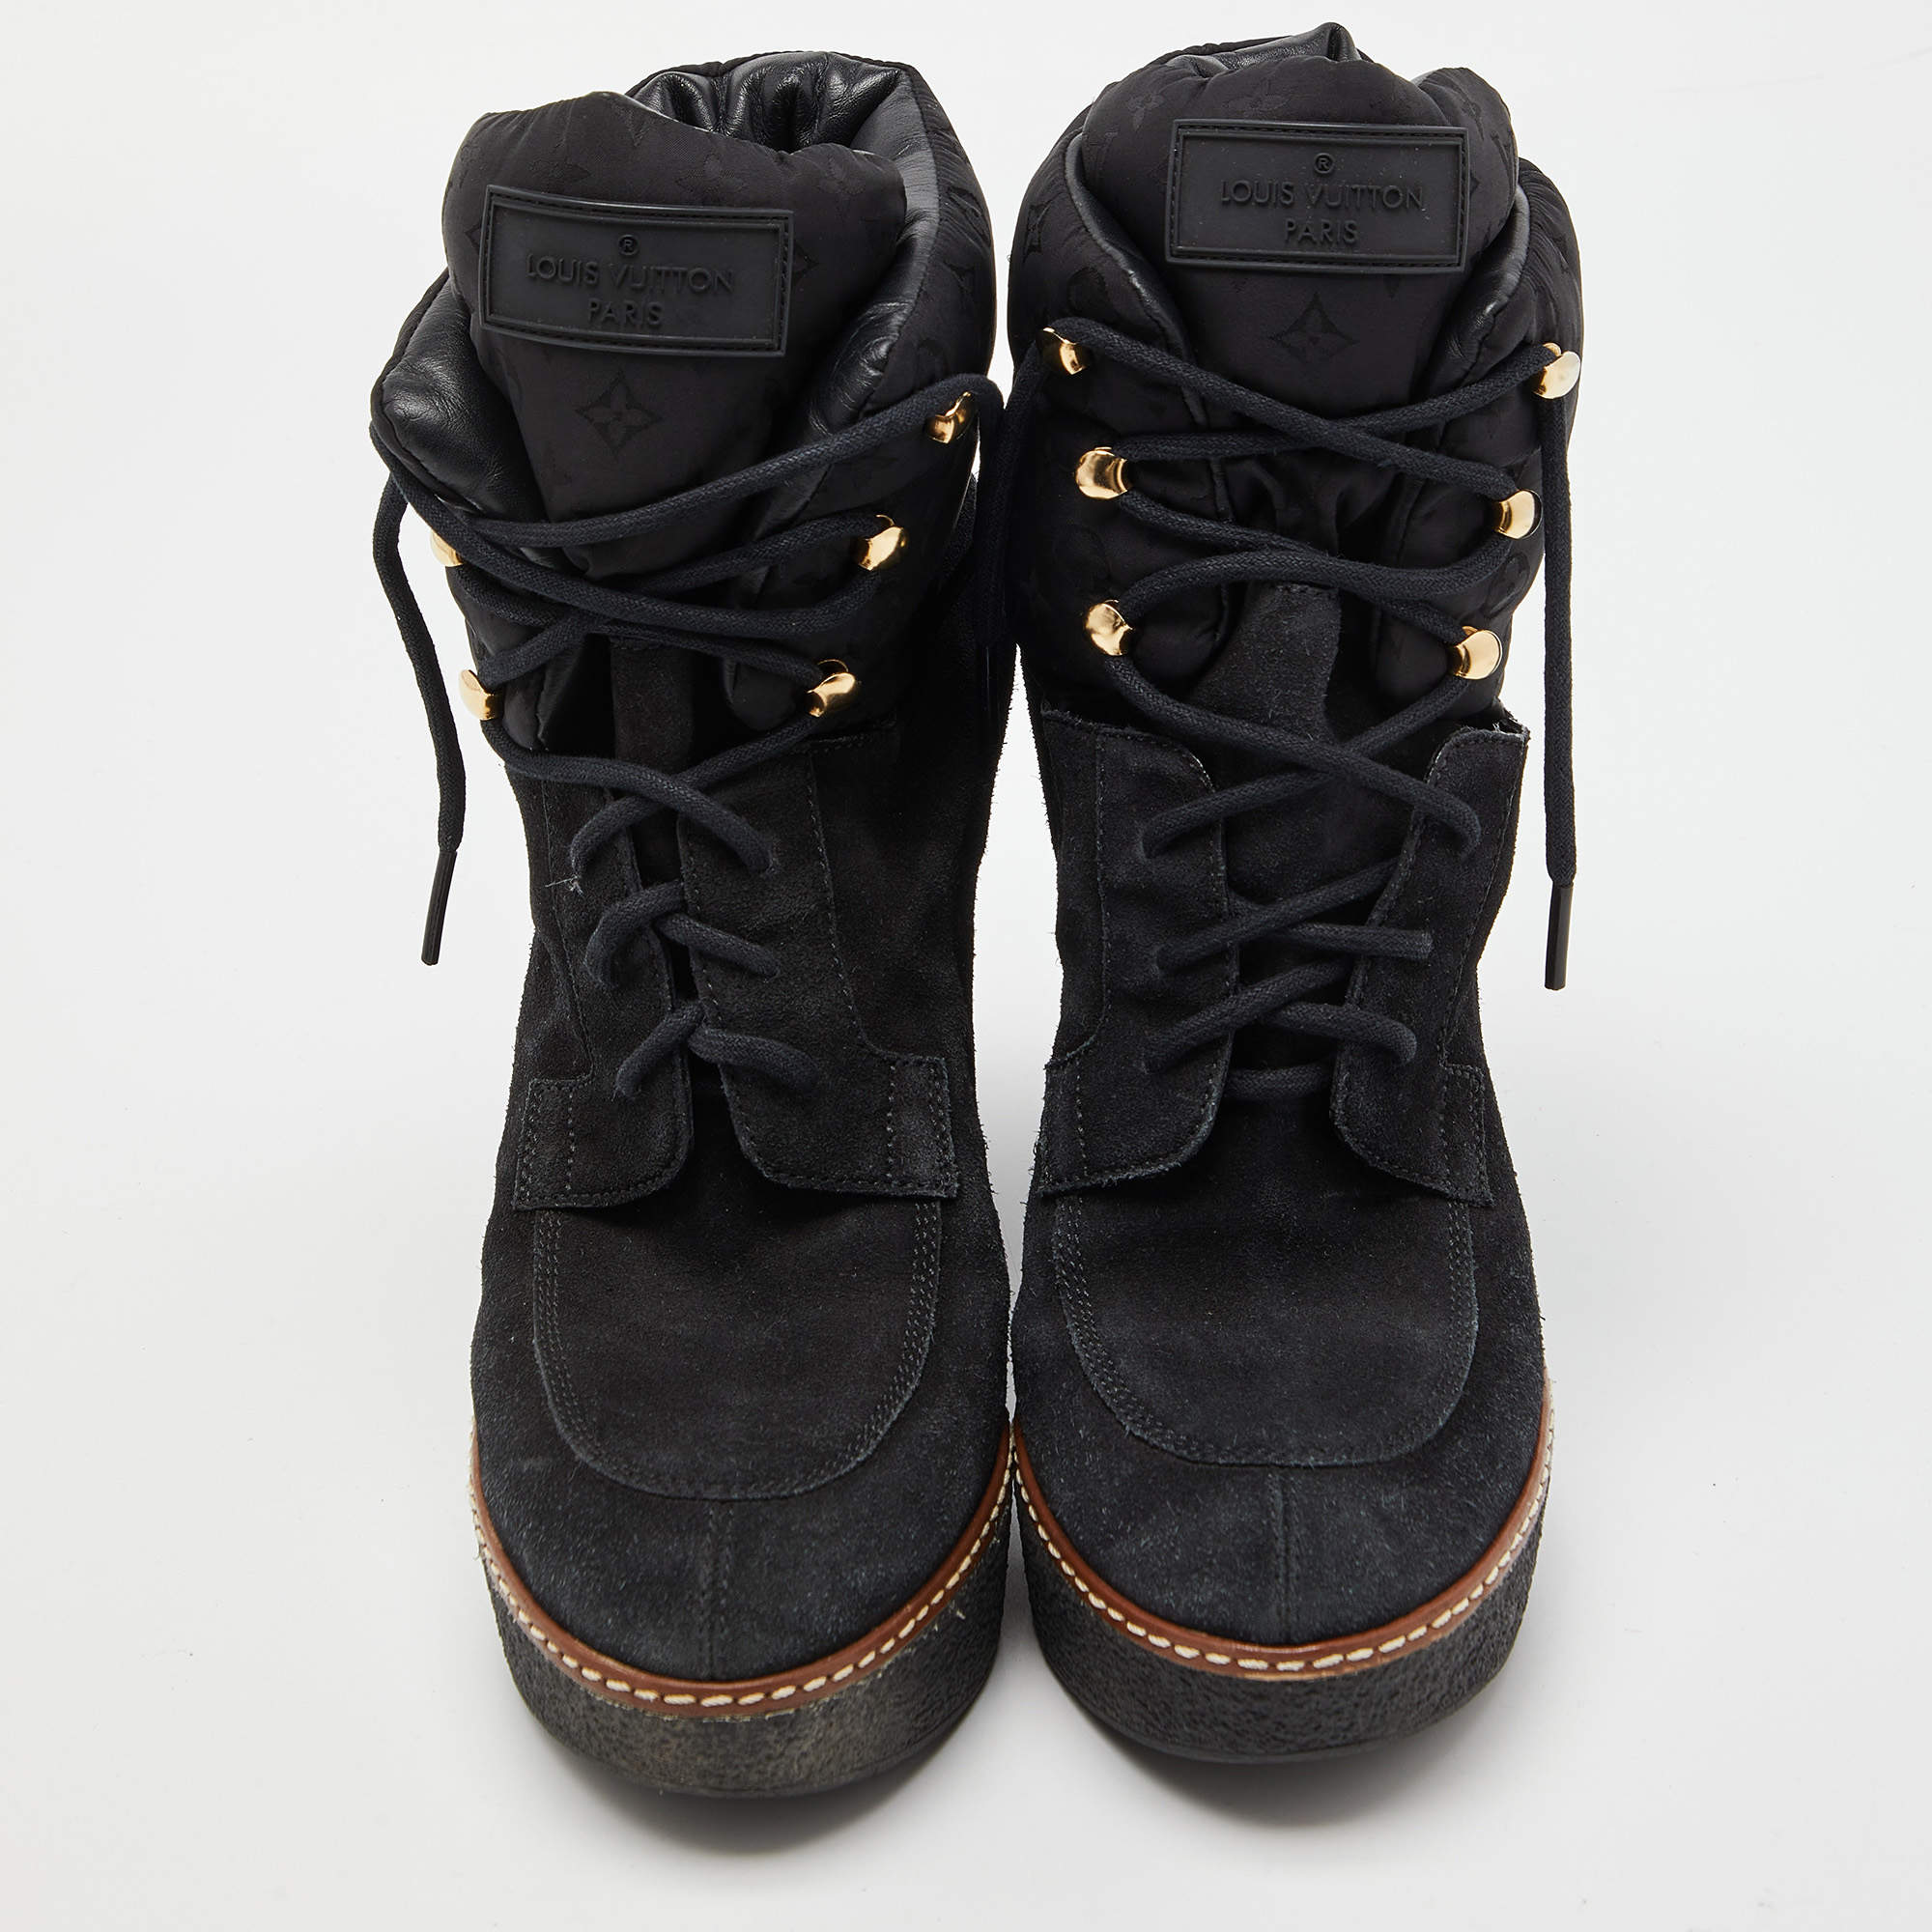 Louis Vuitton - Patti Wedge Half Boots - Black - Women - Size: 37.0 - Luxury